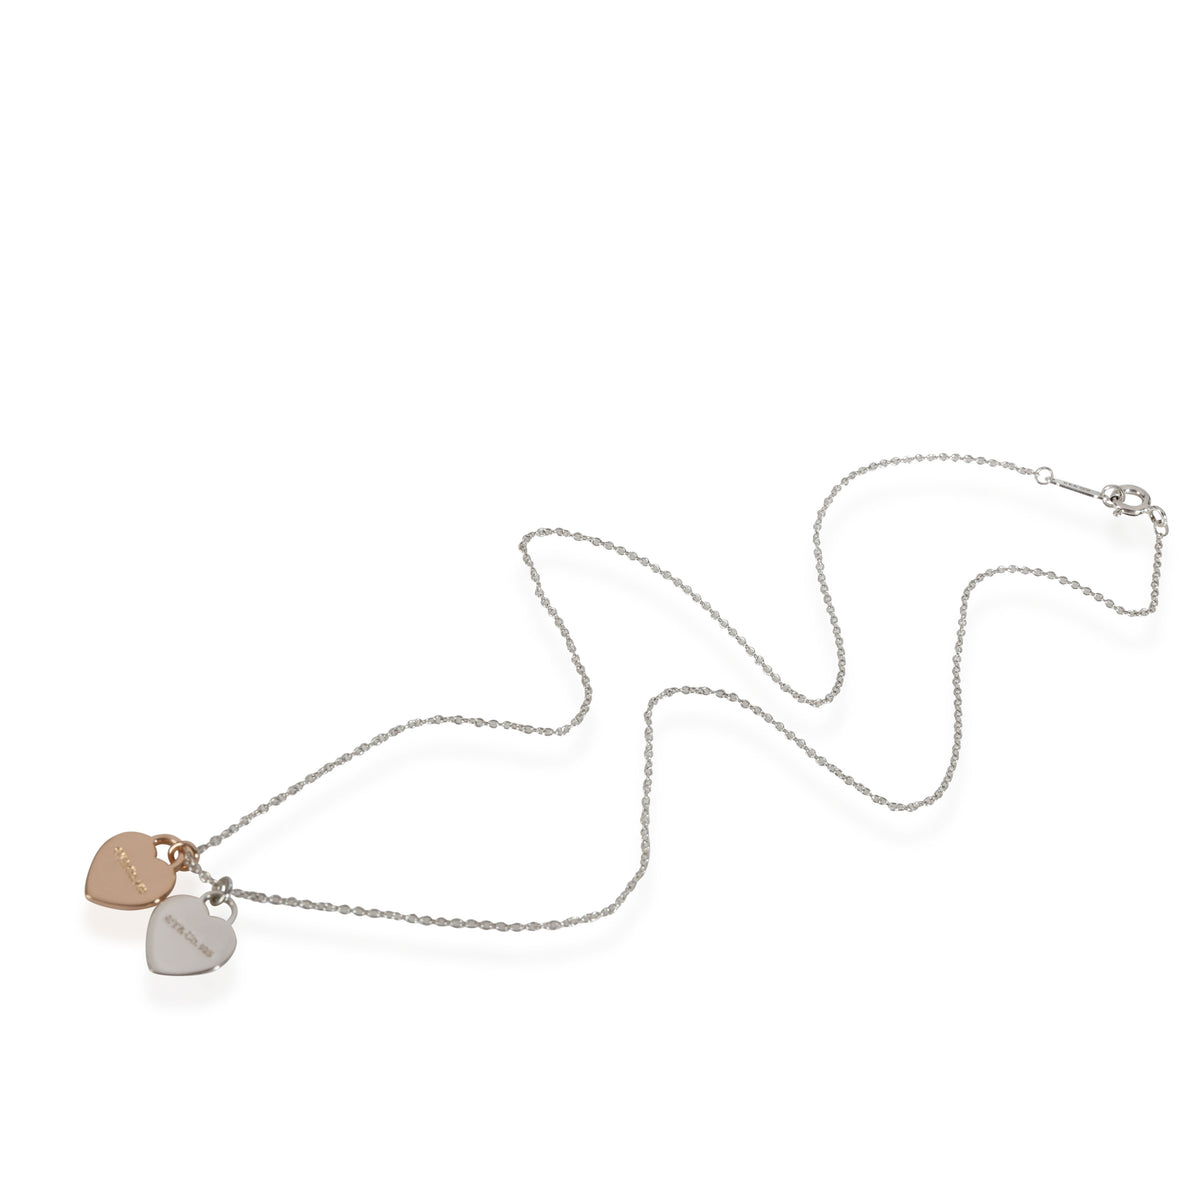 Tiffany red mini double heart pendant necklace | Heart pendant necklace, Heart  pendant, Shop necklaces